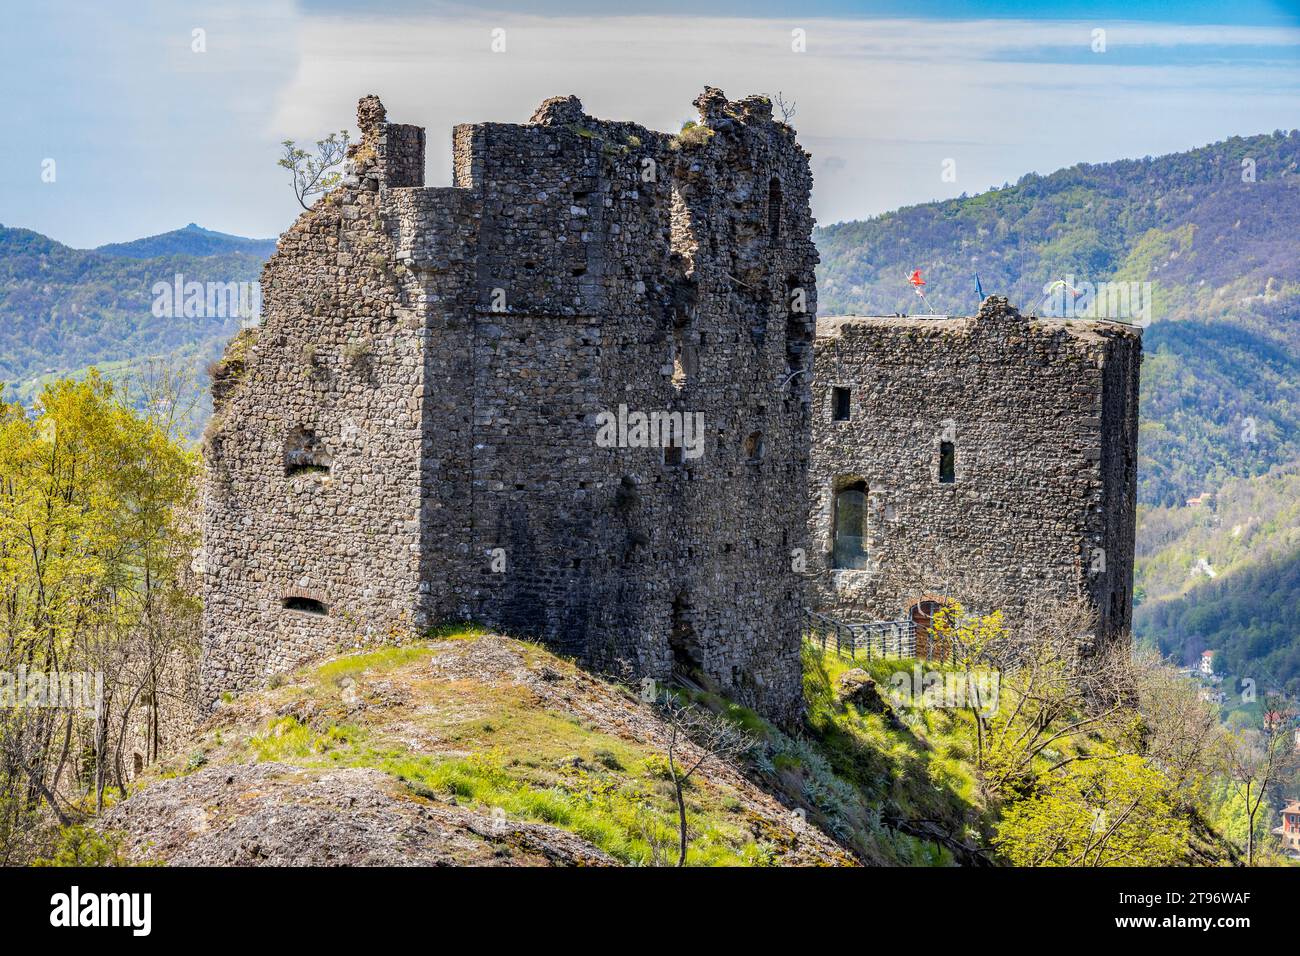 Ruinas del castillo de Savignone en el interior de Liguria de Génova, Italia Foto de stock